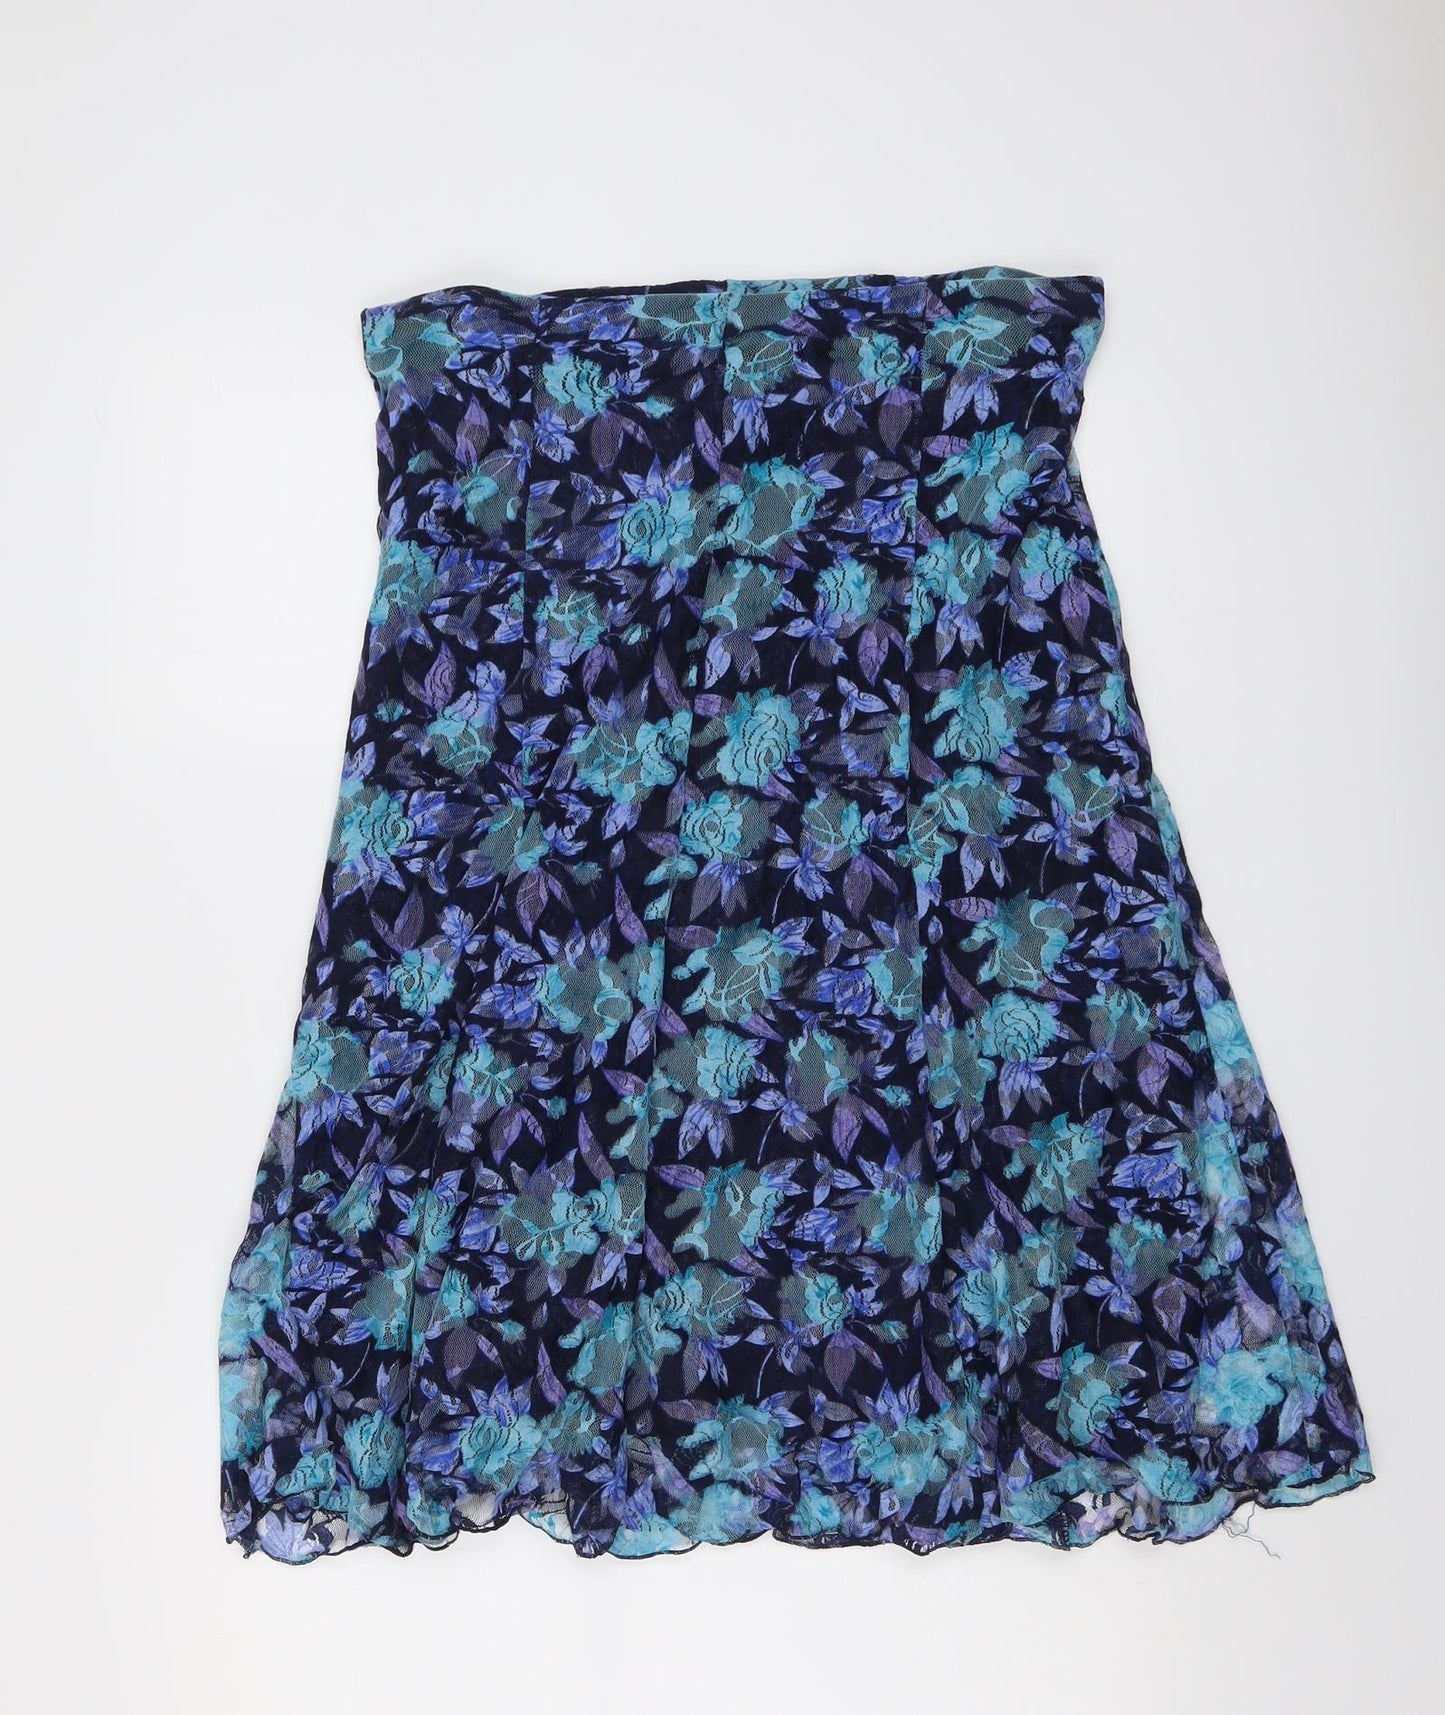 Bonmarché Womens Blue Floral Polyester A-Line Skirt Size 14